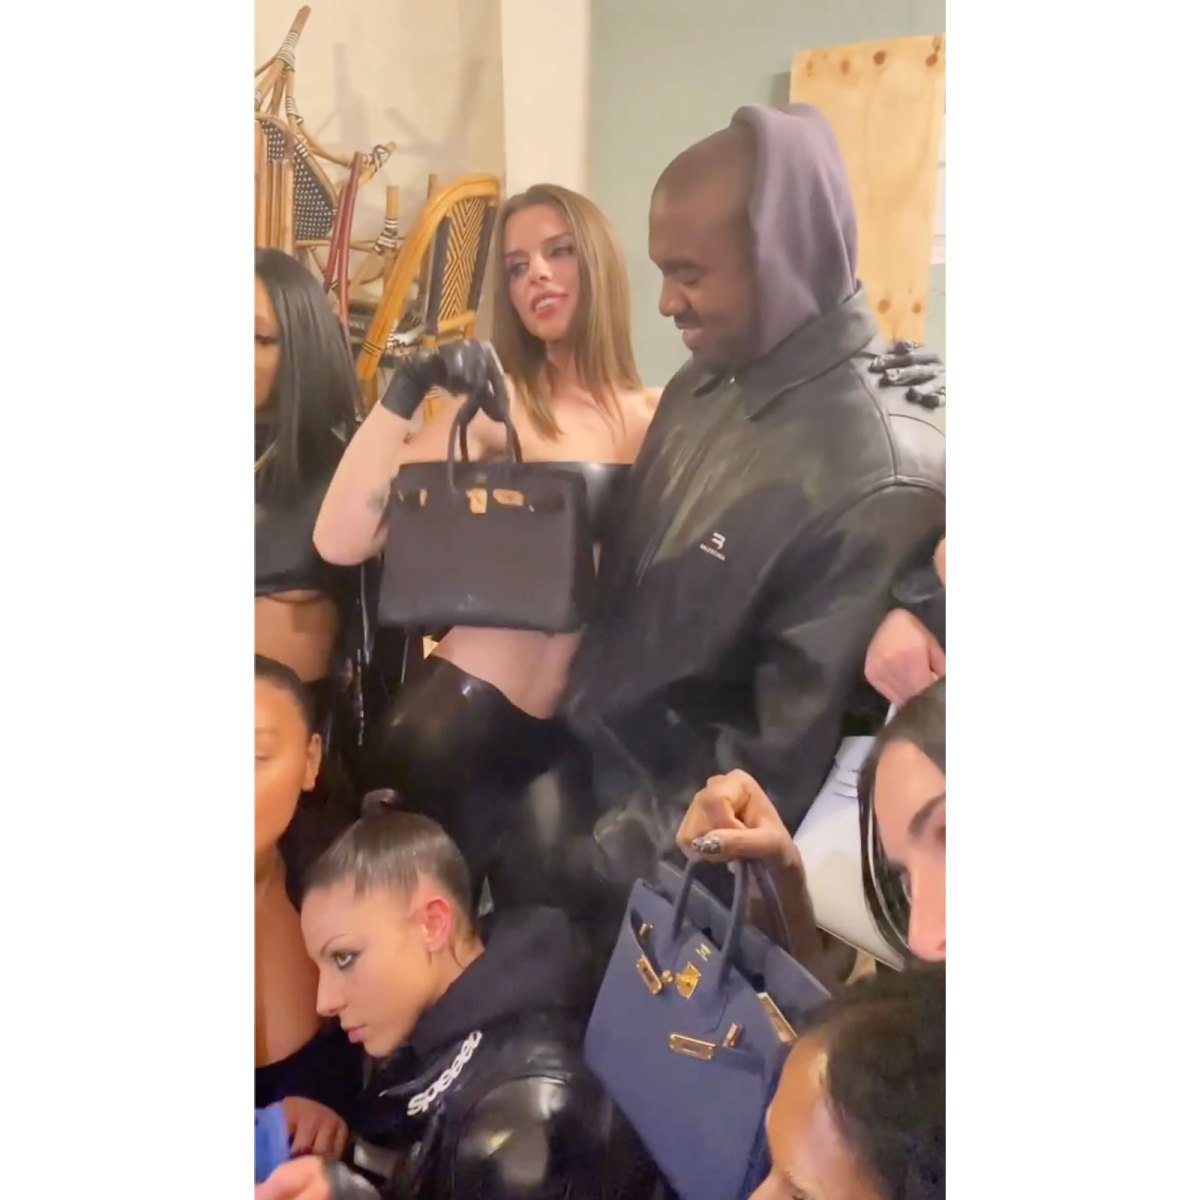 Baby Birkin bag's price explored as Kanye West gifts it to GF Julia Fox